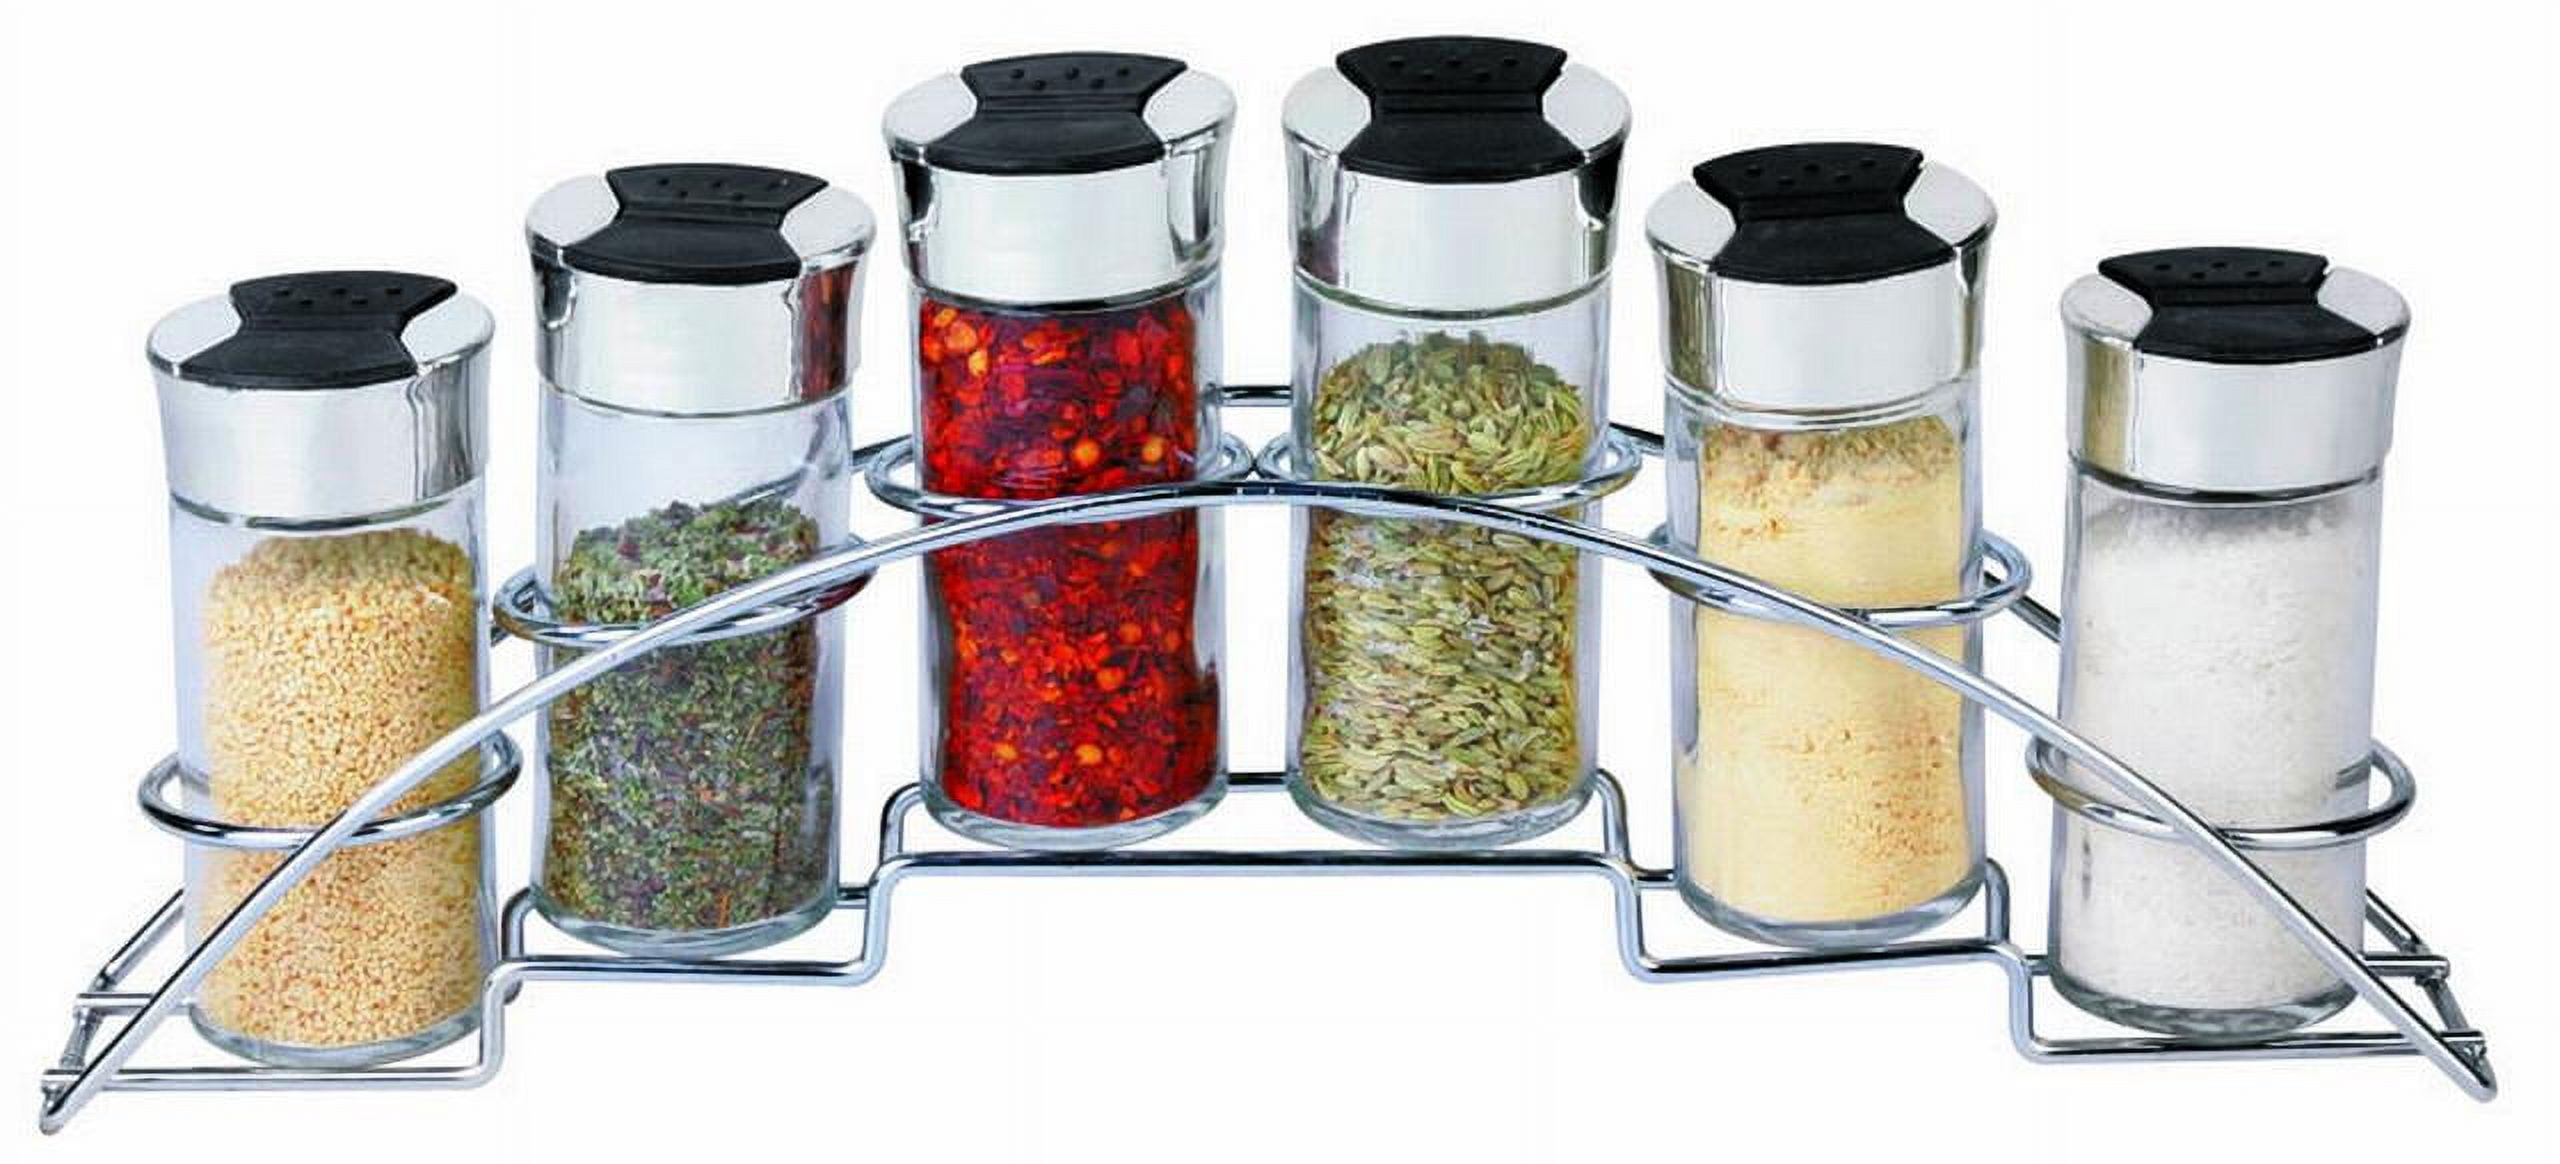 Home Basics Ultra Sleek Half Moon Steel Seasoning and Herbs Organizing Spice  Rack with 6 Empty Glass Spice Jars, Chrome 